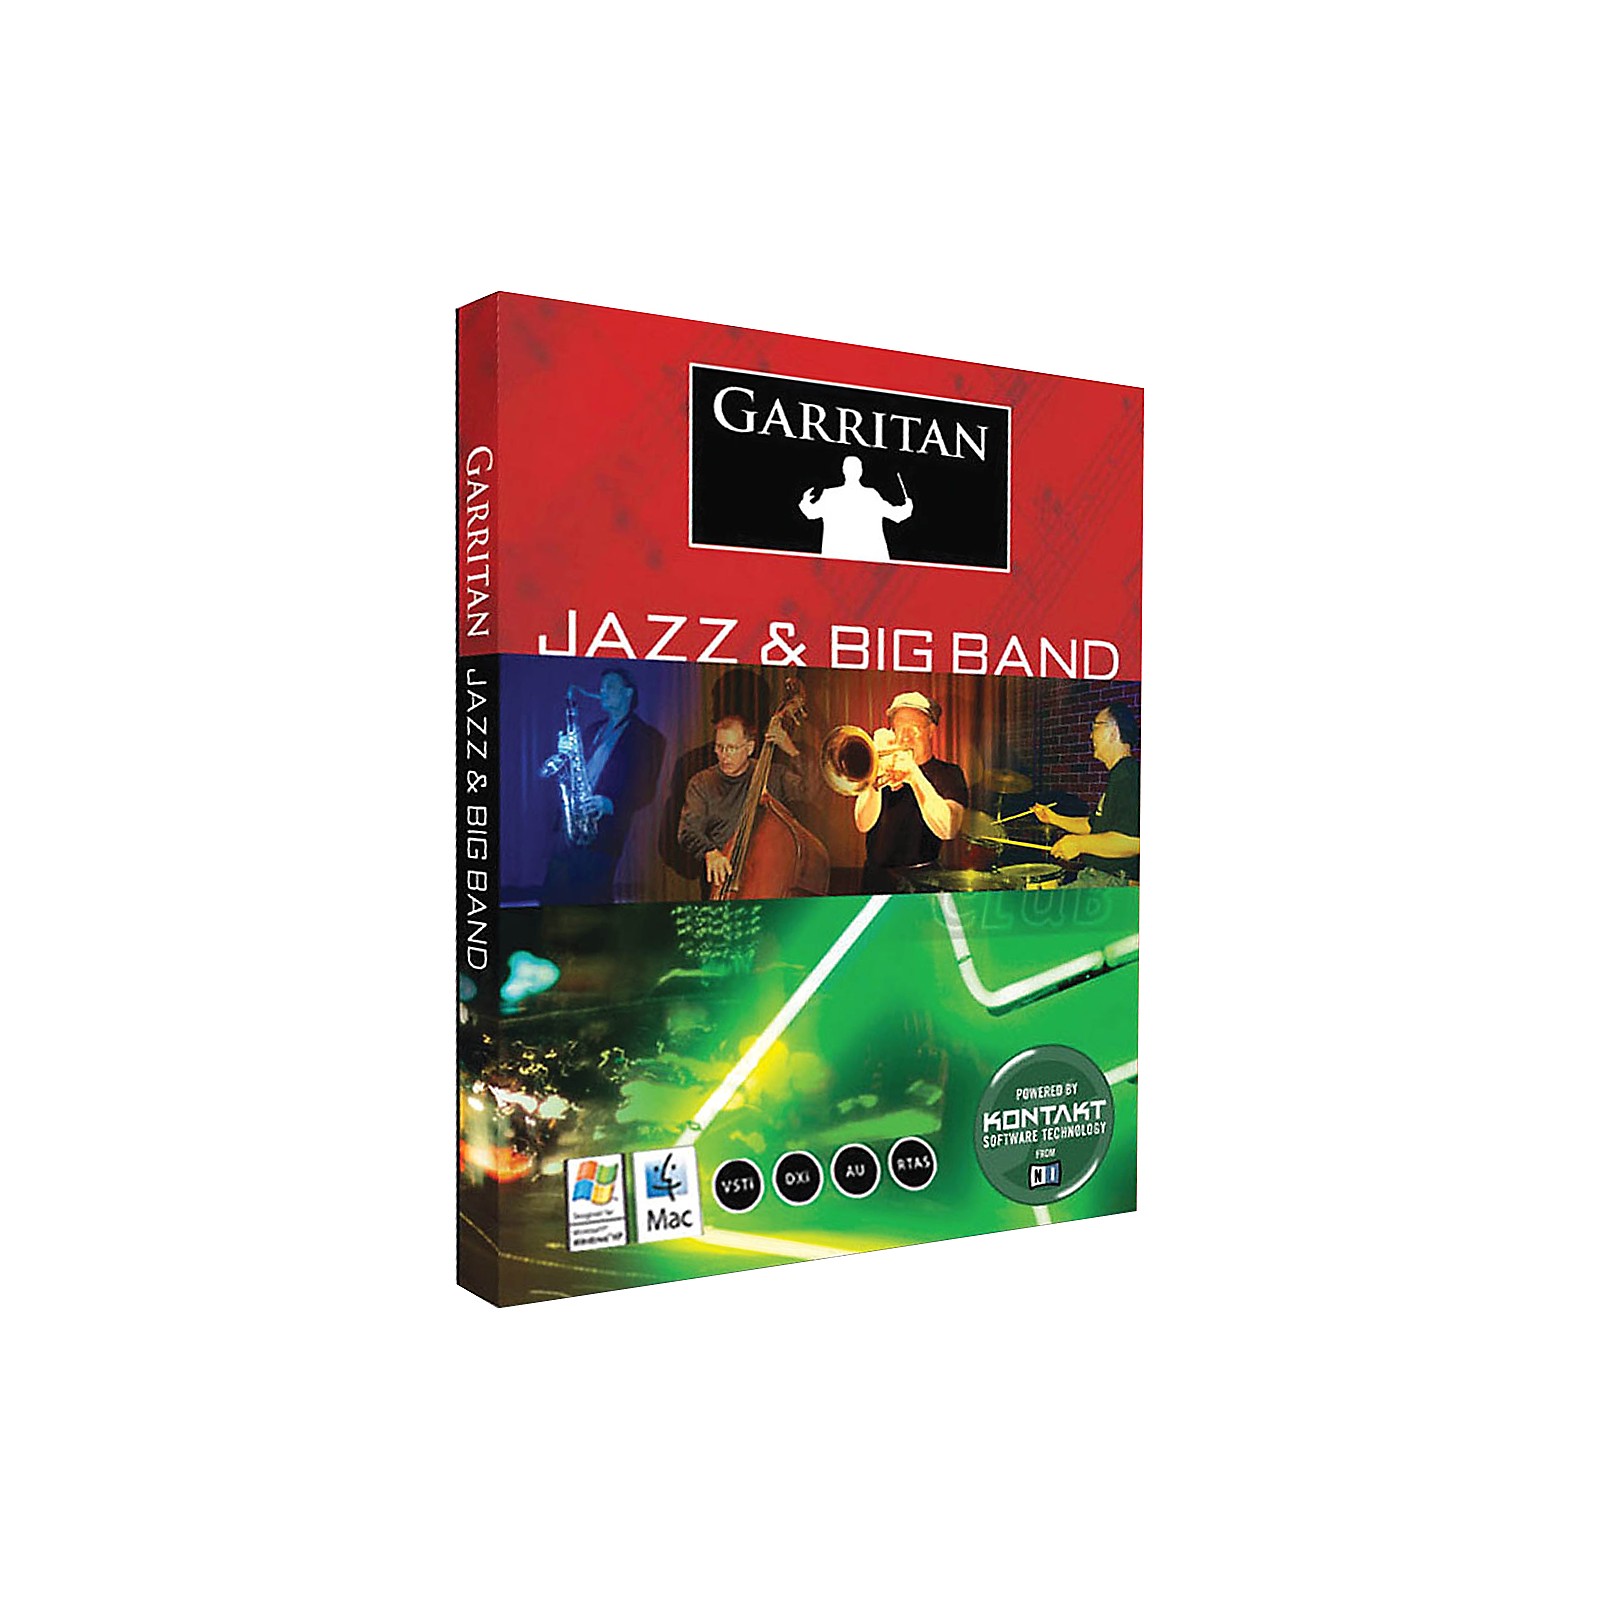 garritan jazz and big band automatic variability control